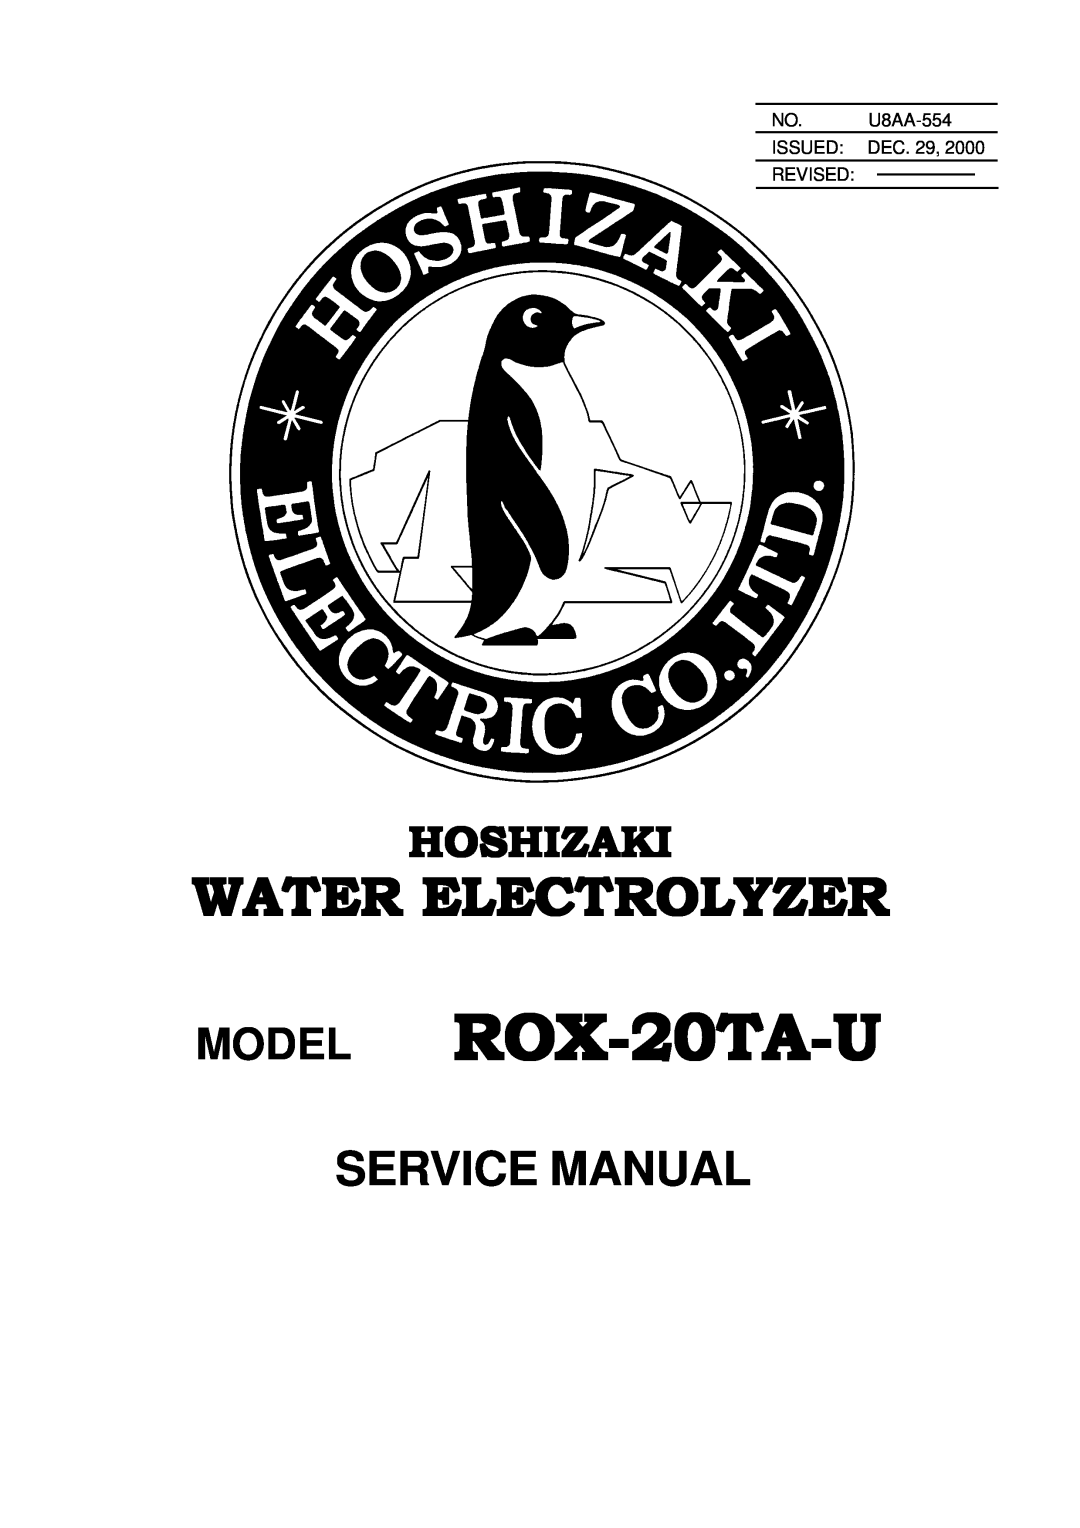 Hoshizaki service manual MODEL ROX-20TA-U, Water Electrolyzer, Hoshizaki, NO. U8AA-554 ISSUED DEC. 29 REVISED 